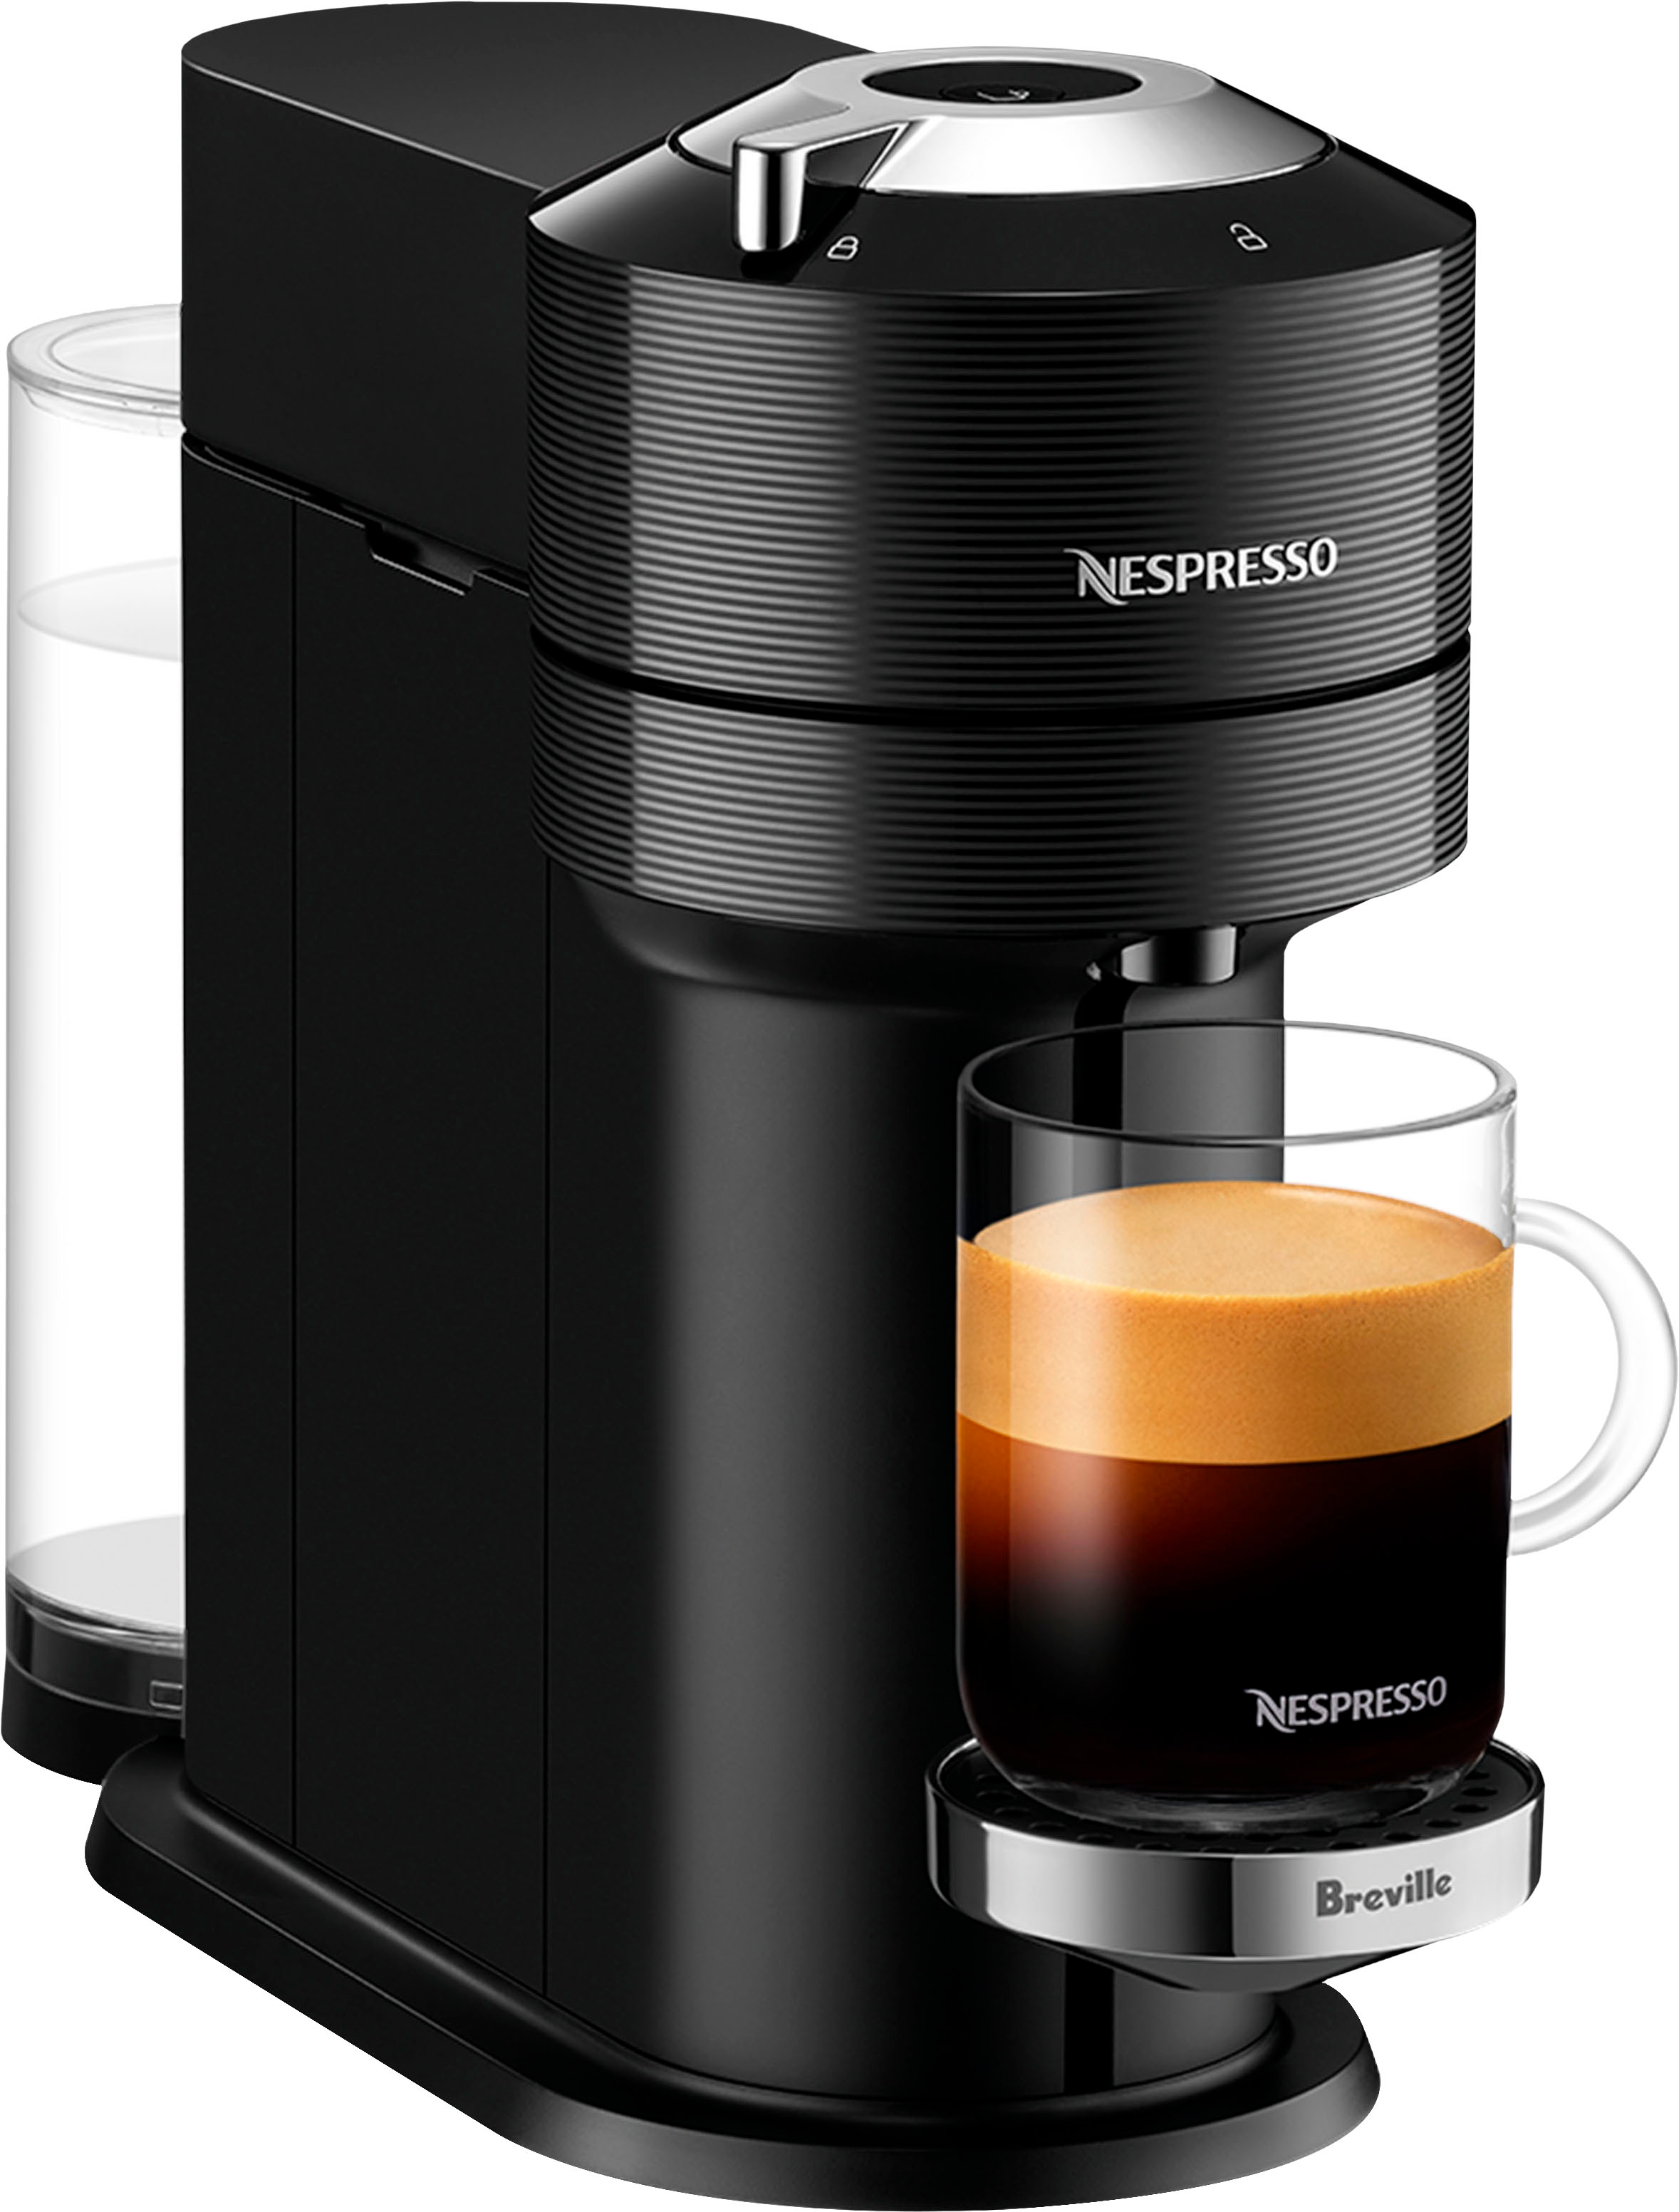 Nespresso Vertuo Next Coffee Machine with Aeroccino3 Milk Frother